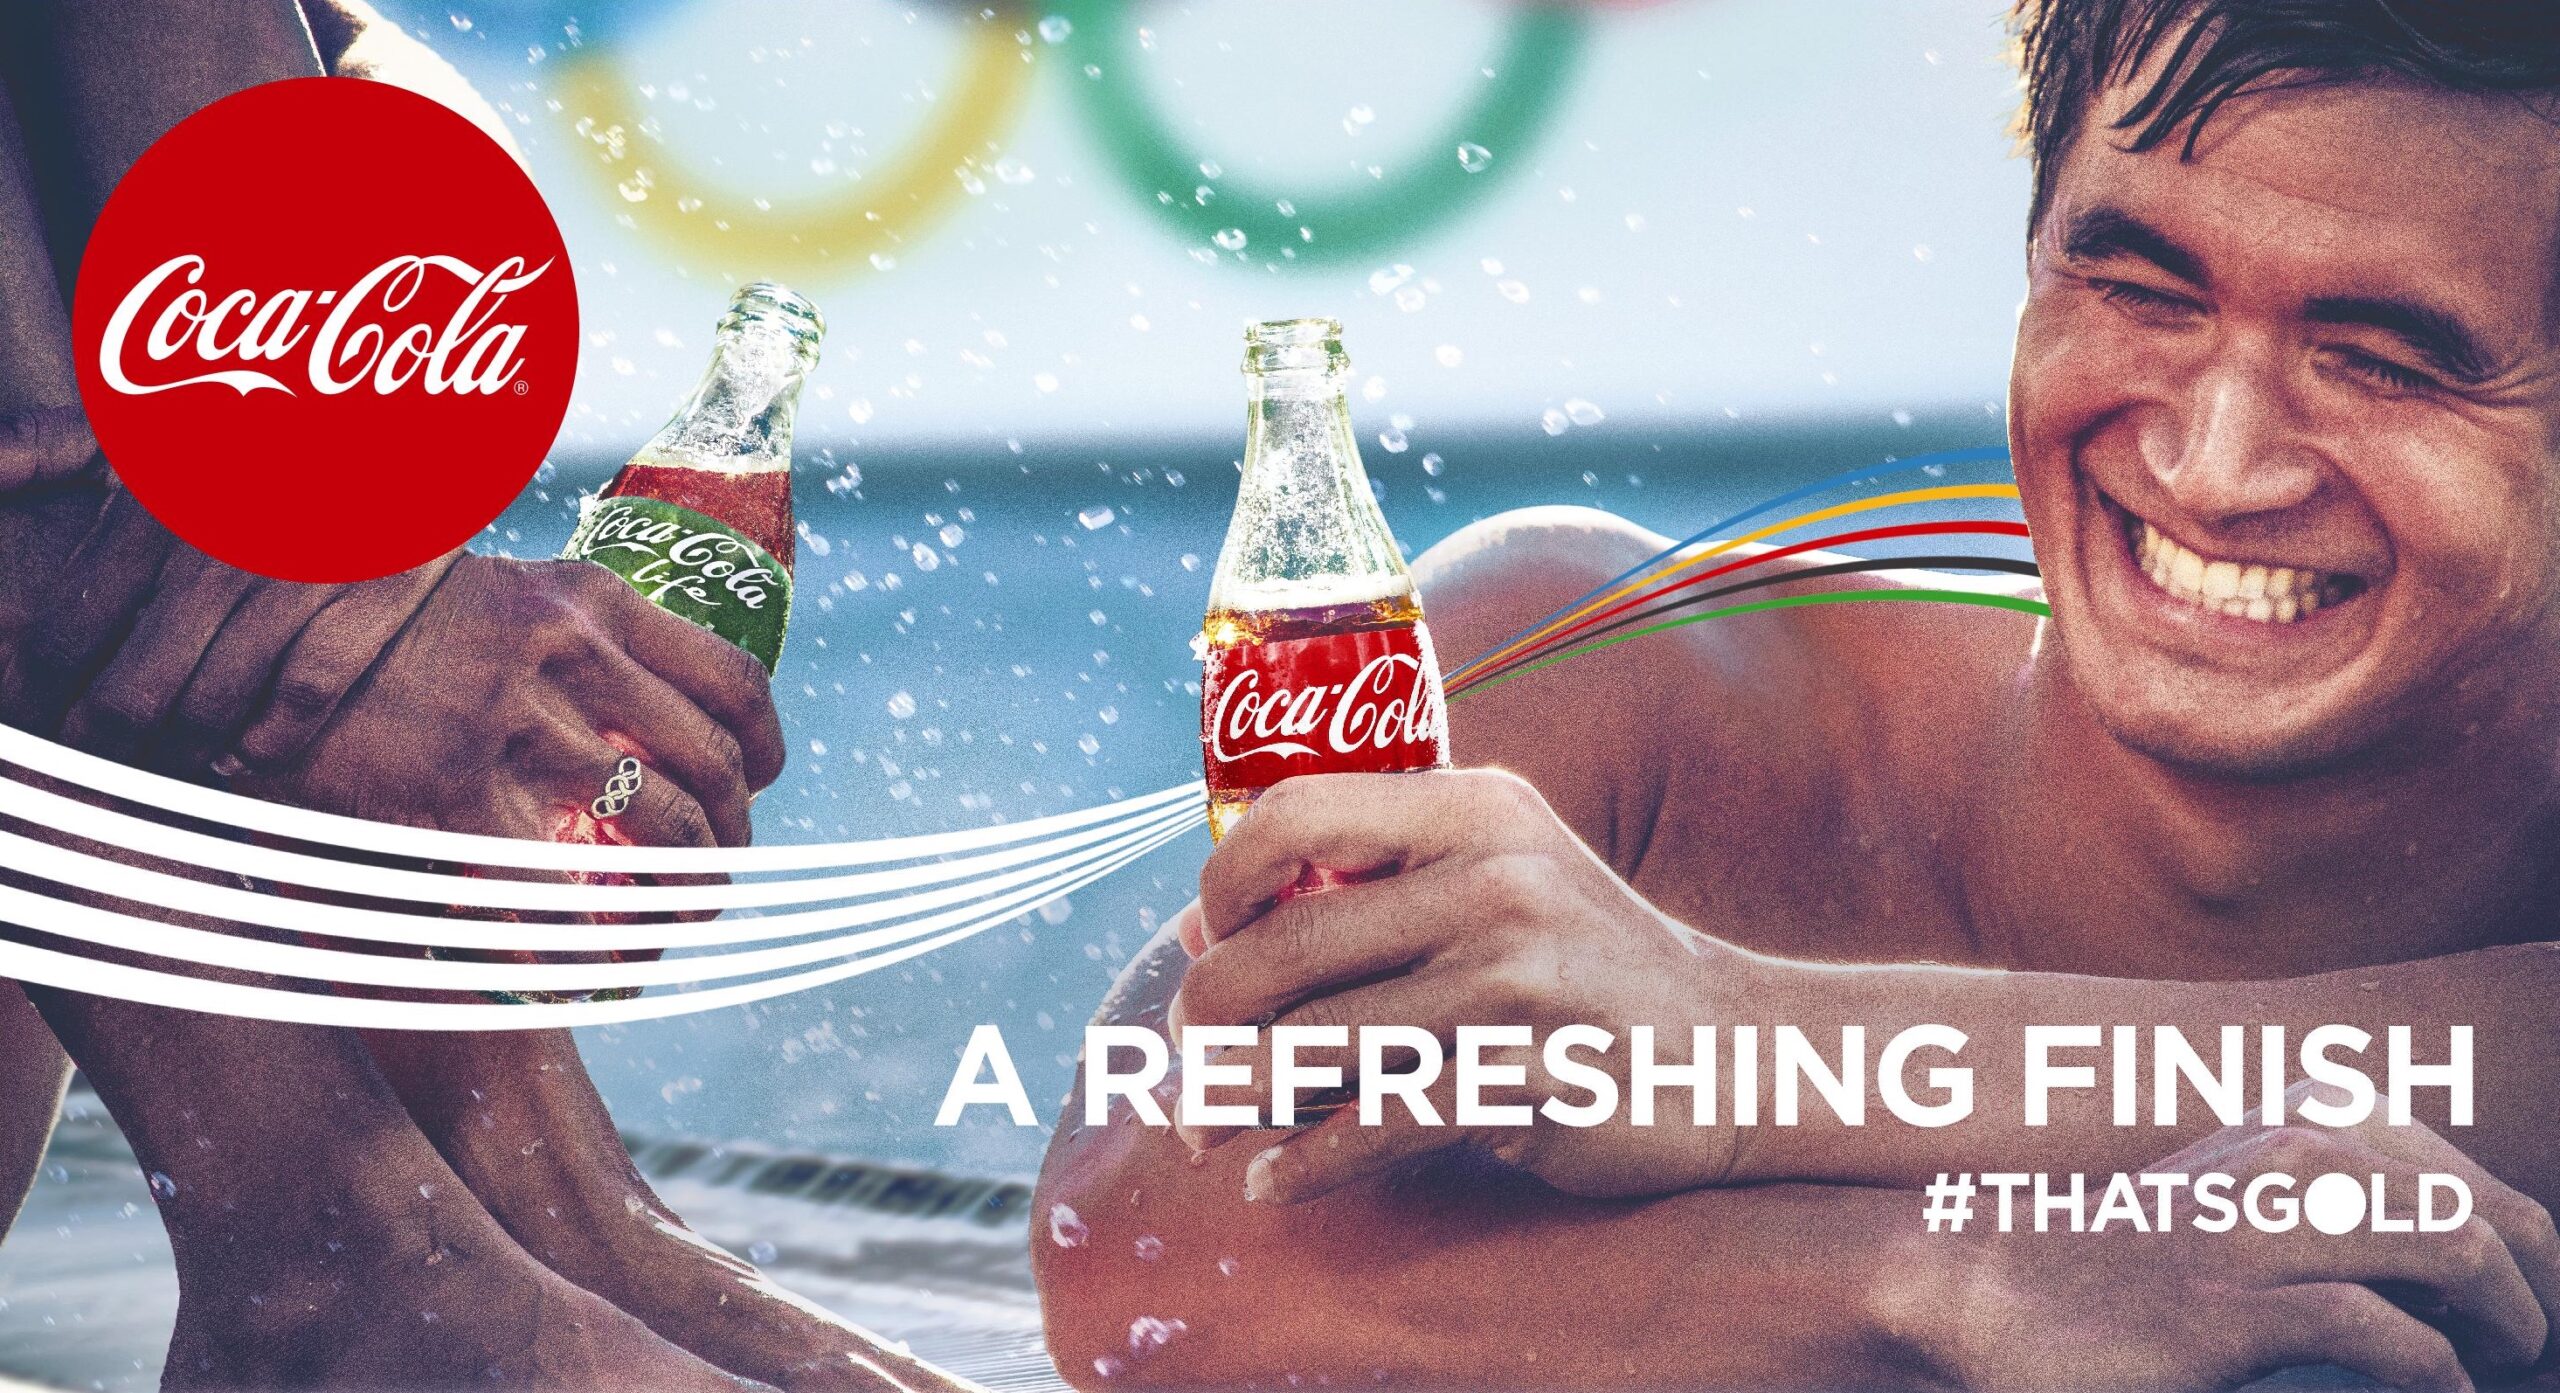 Chiến dịch quảng cáo Coca-Cola